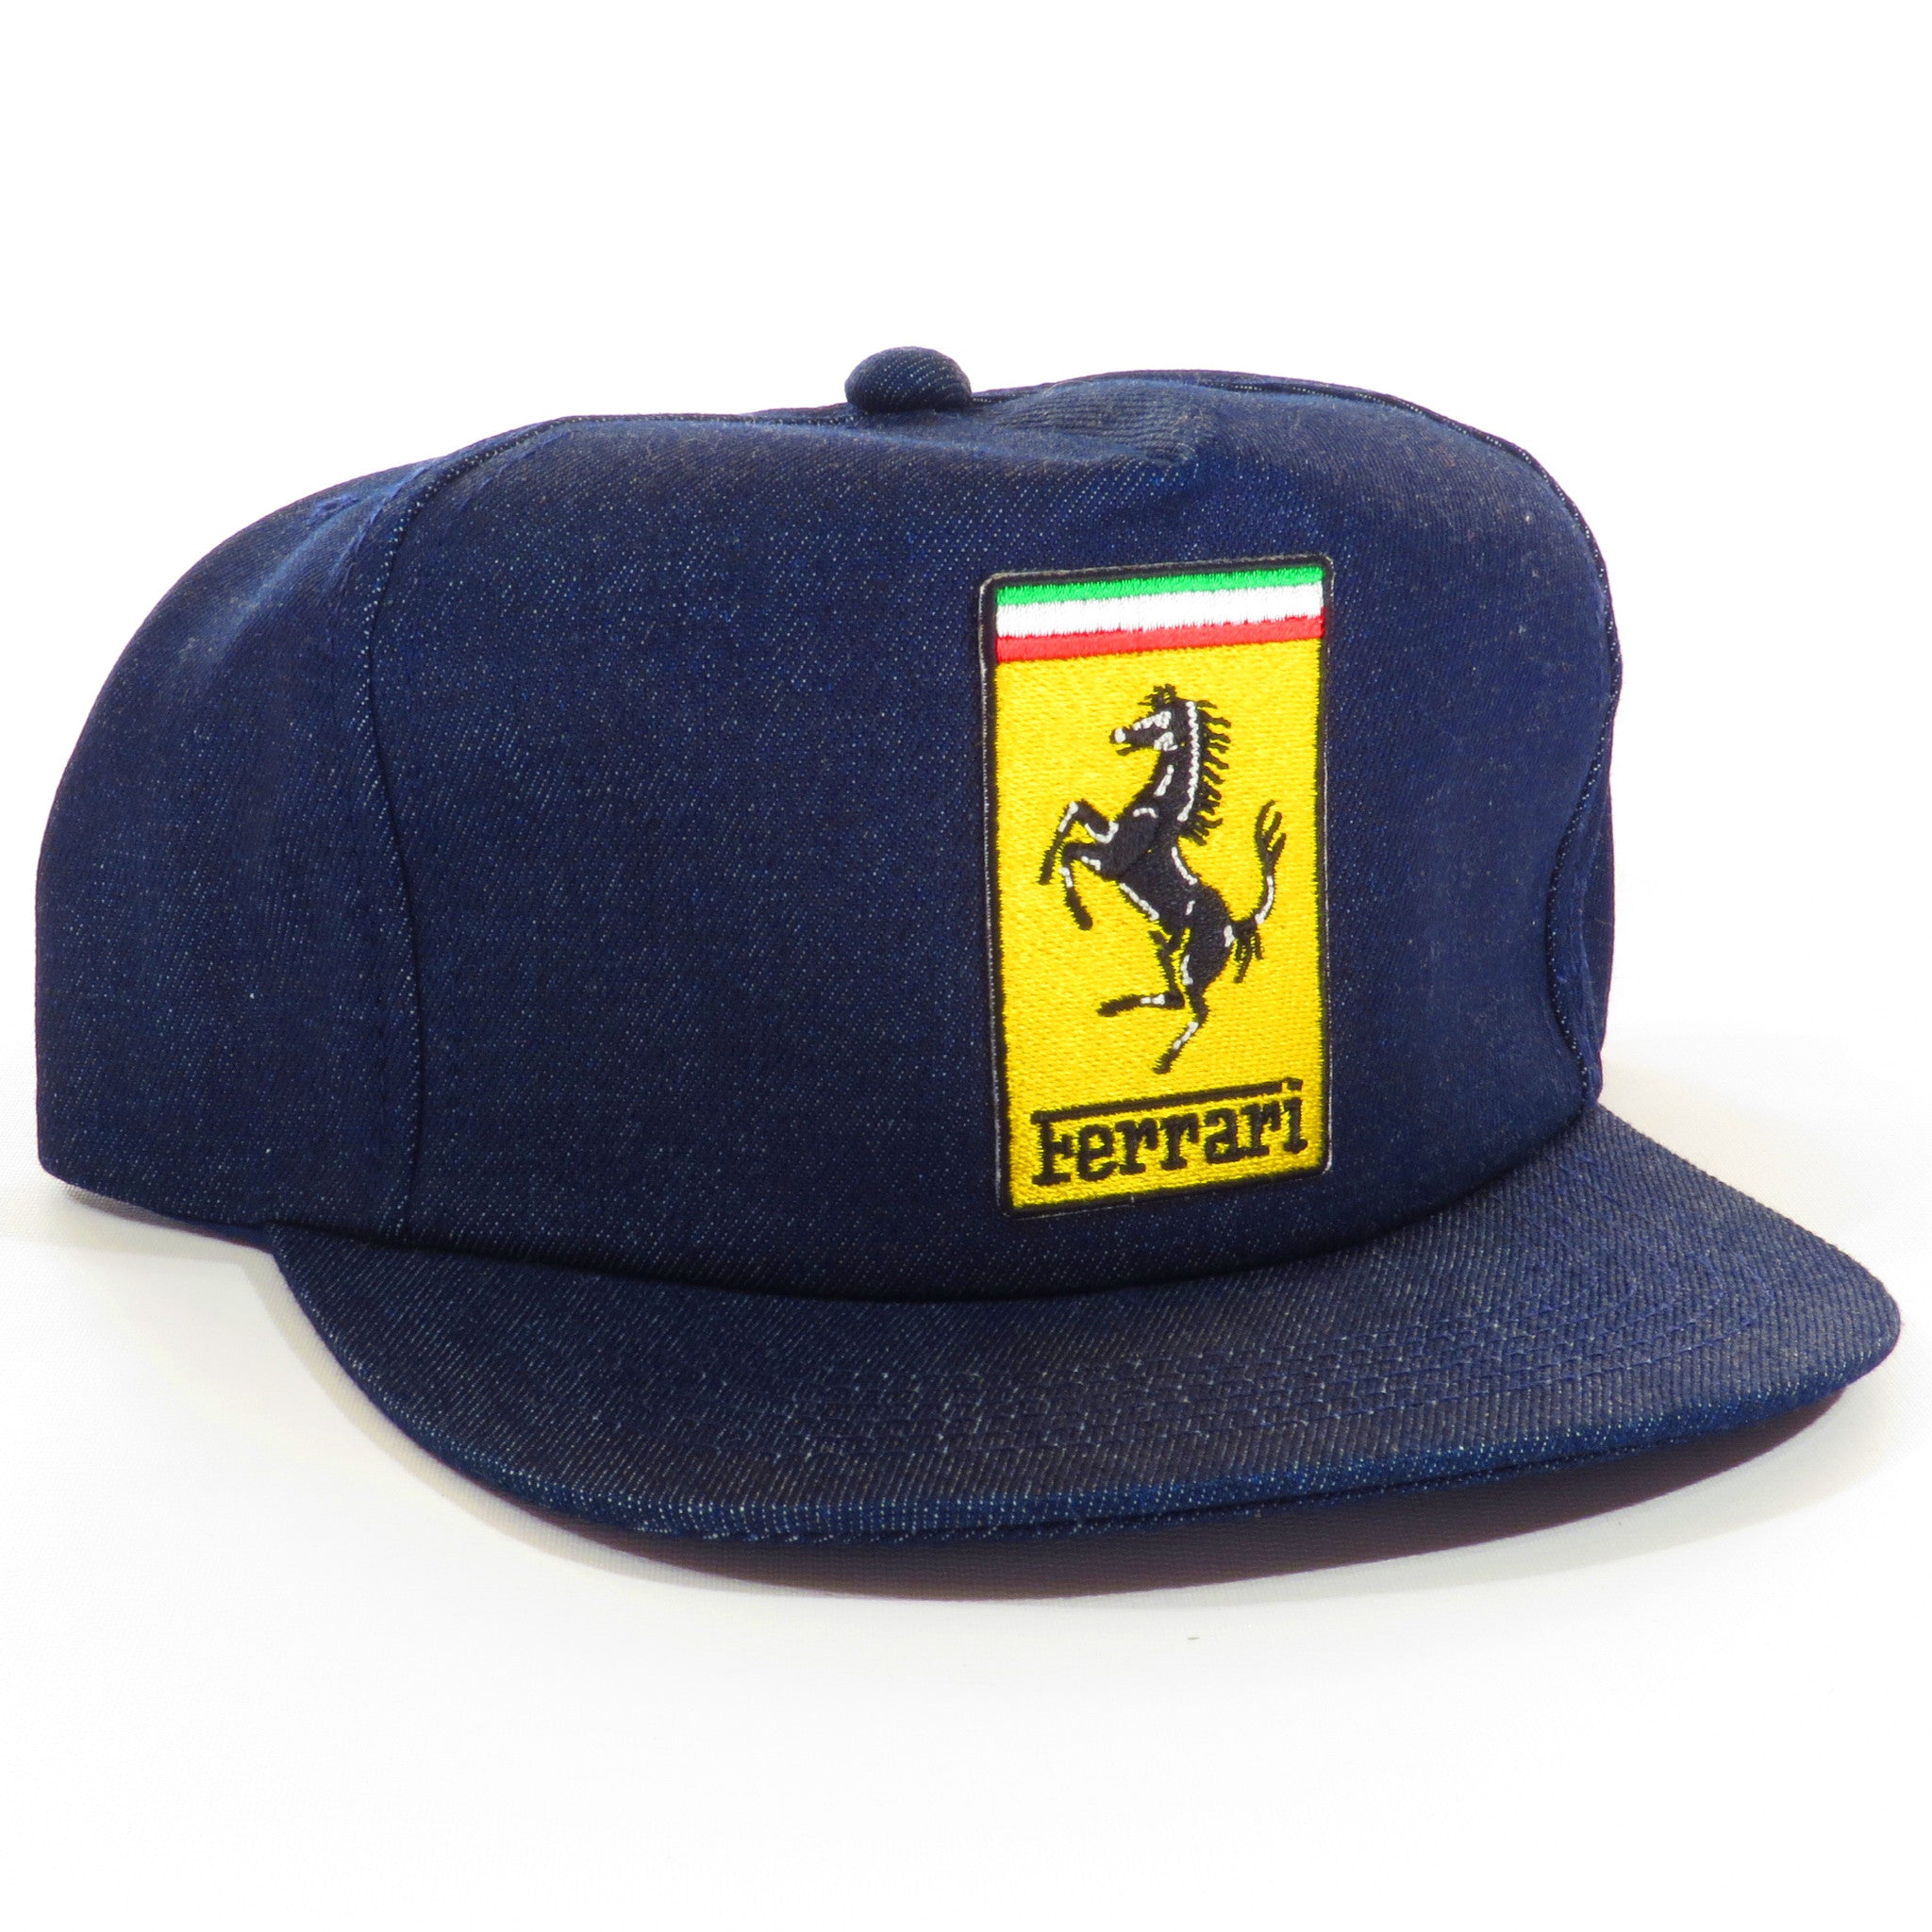 Ferrari Raw Denim Snapback Hat